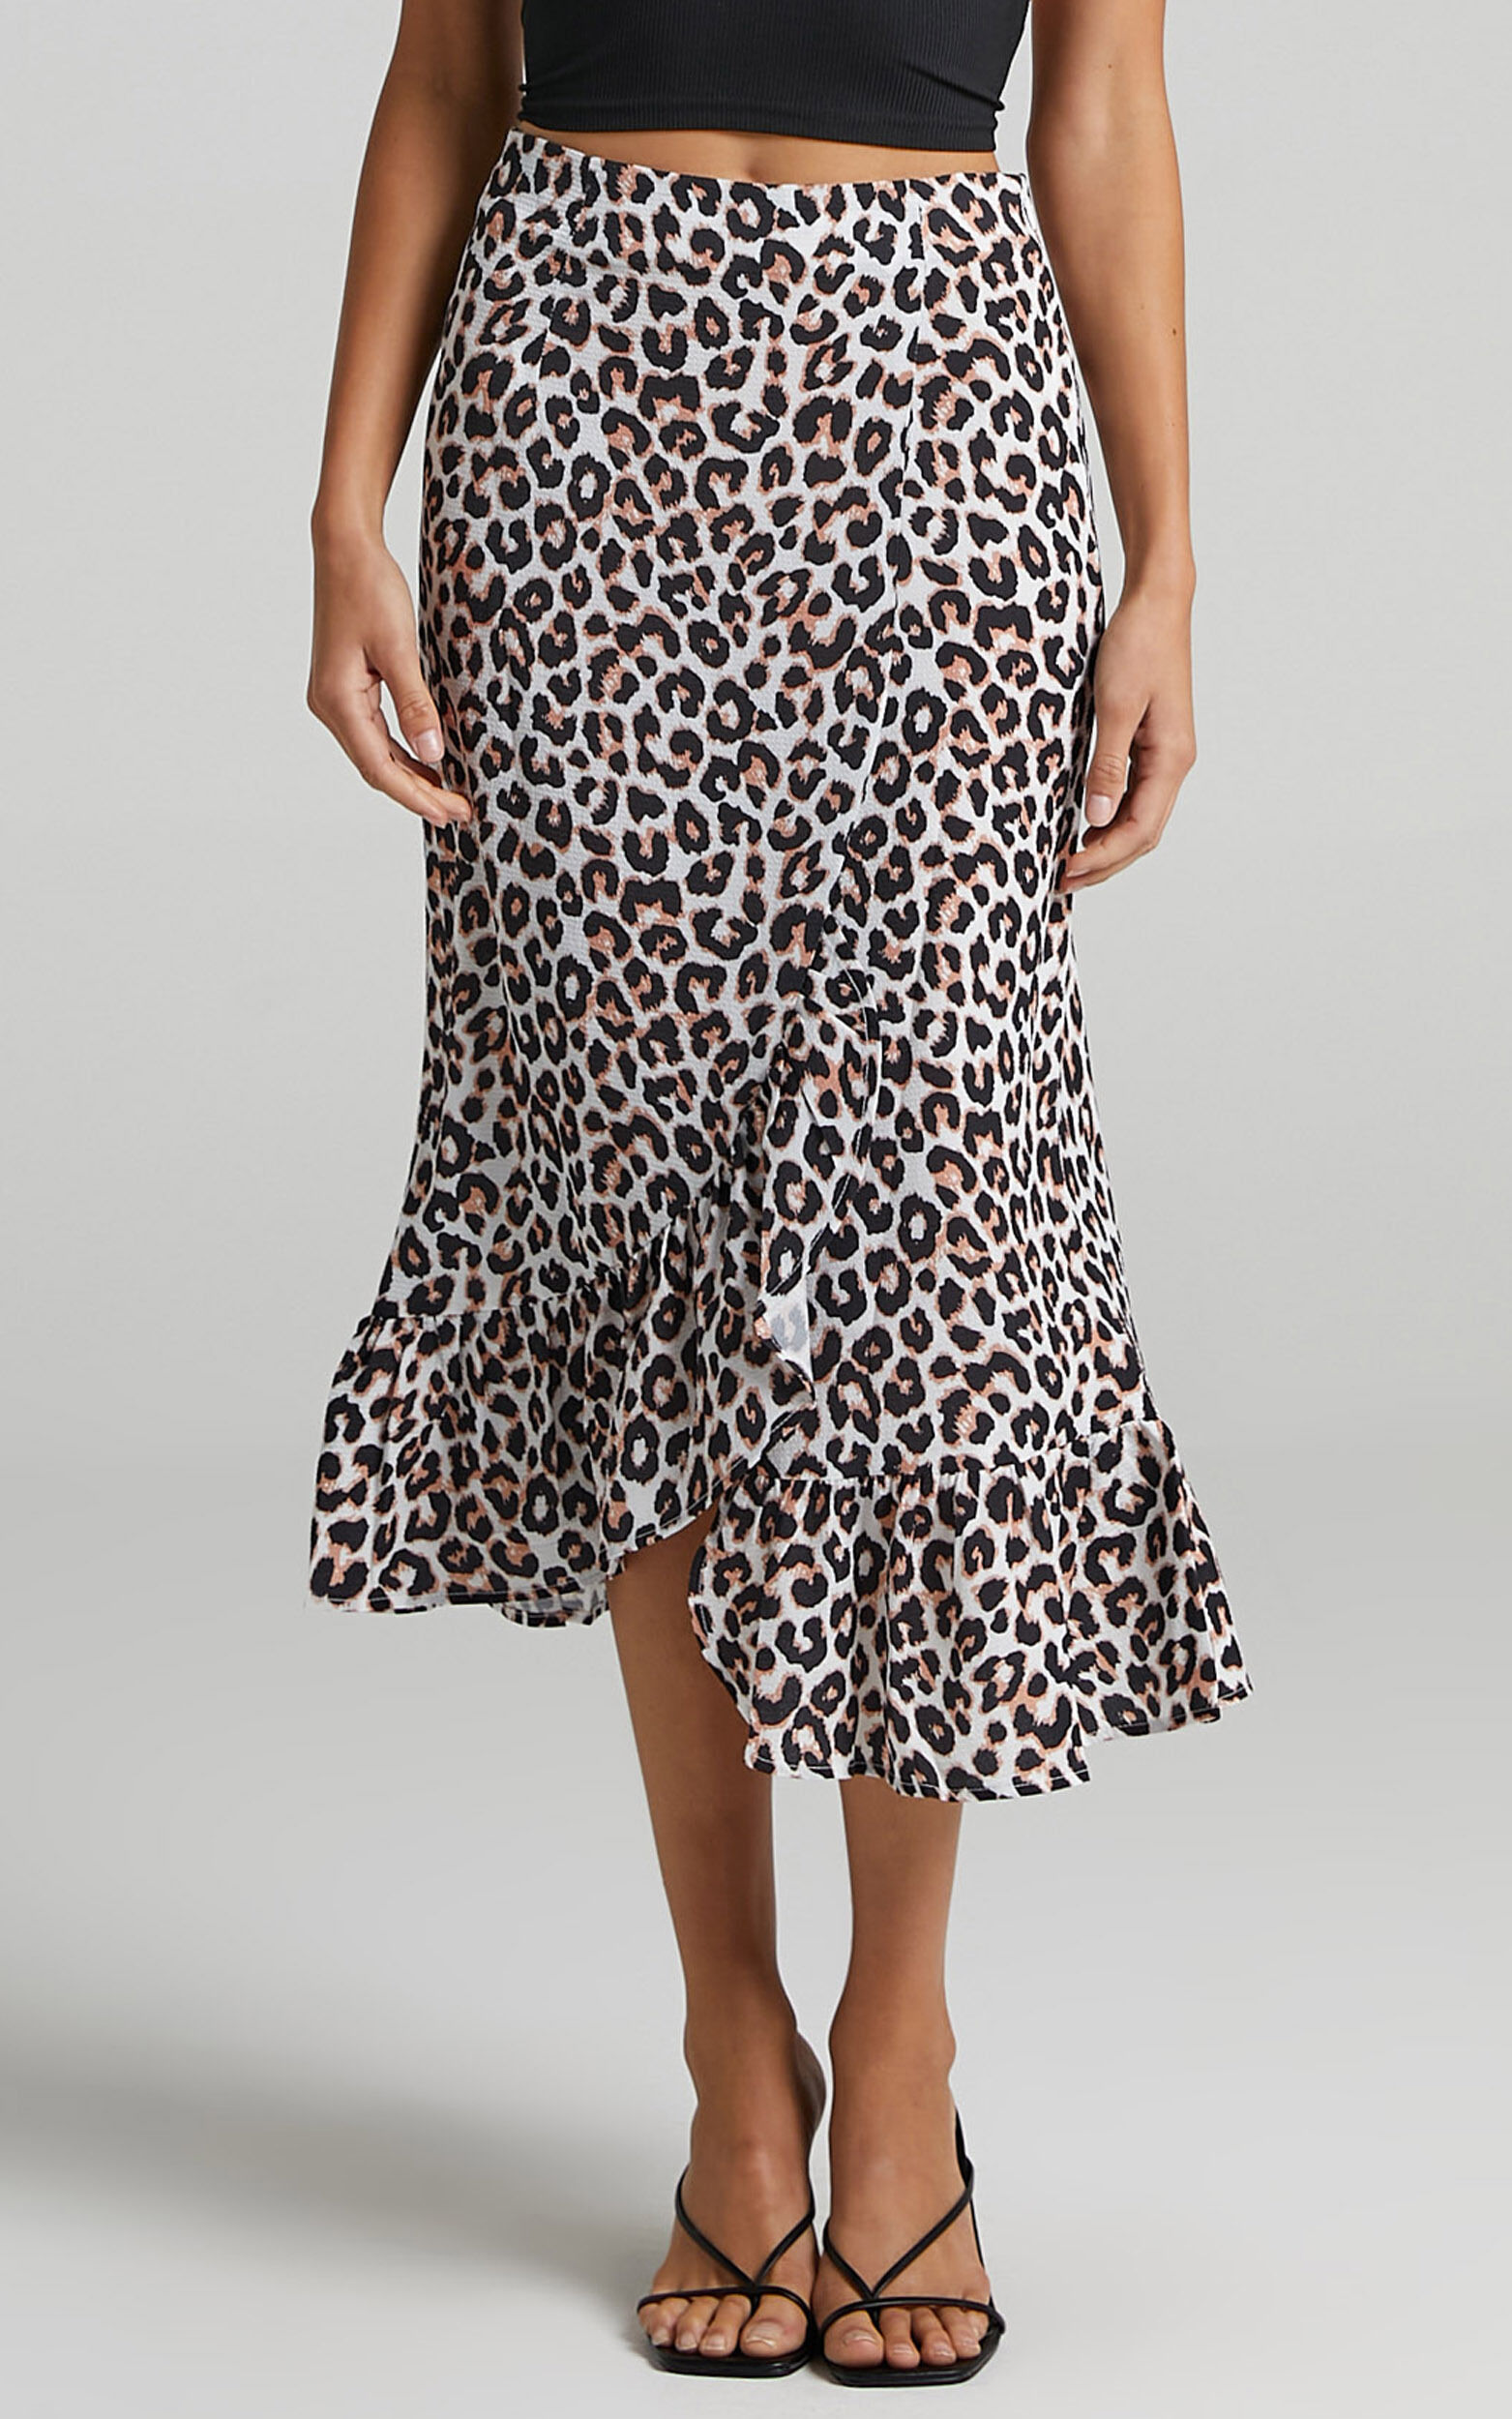 Womens Leopard Ruffle Midi Skirt Ladies High Waist Dress Party Holiday Club Wear